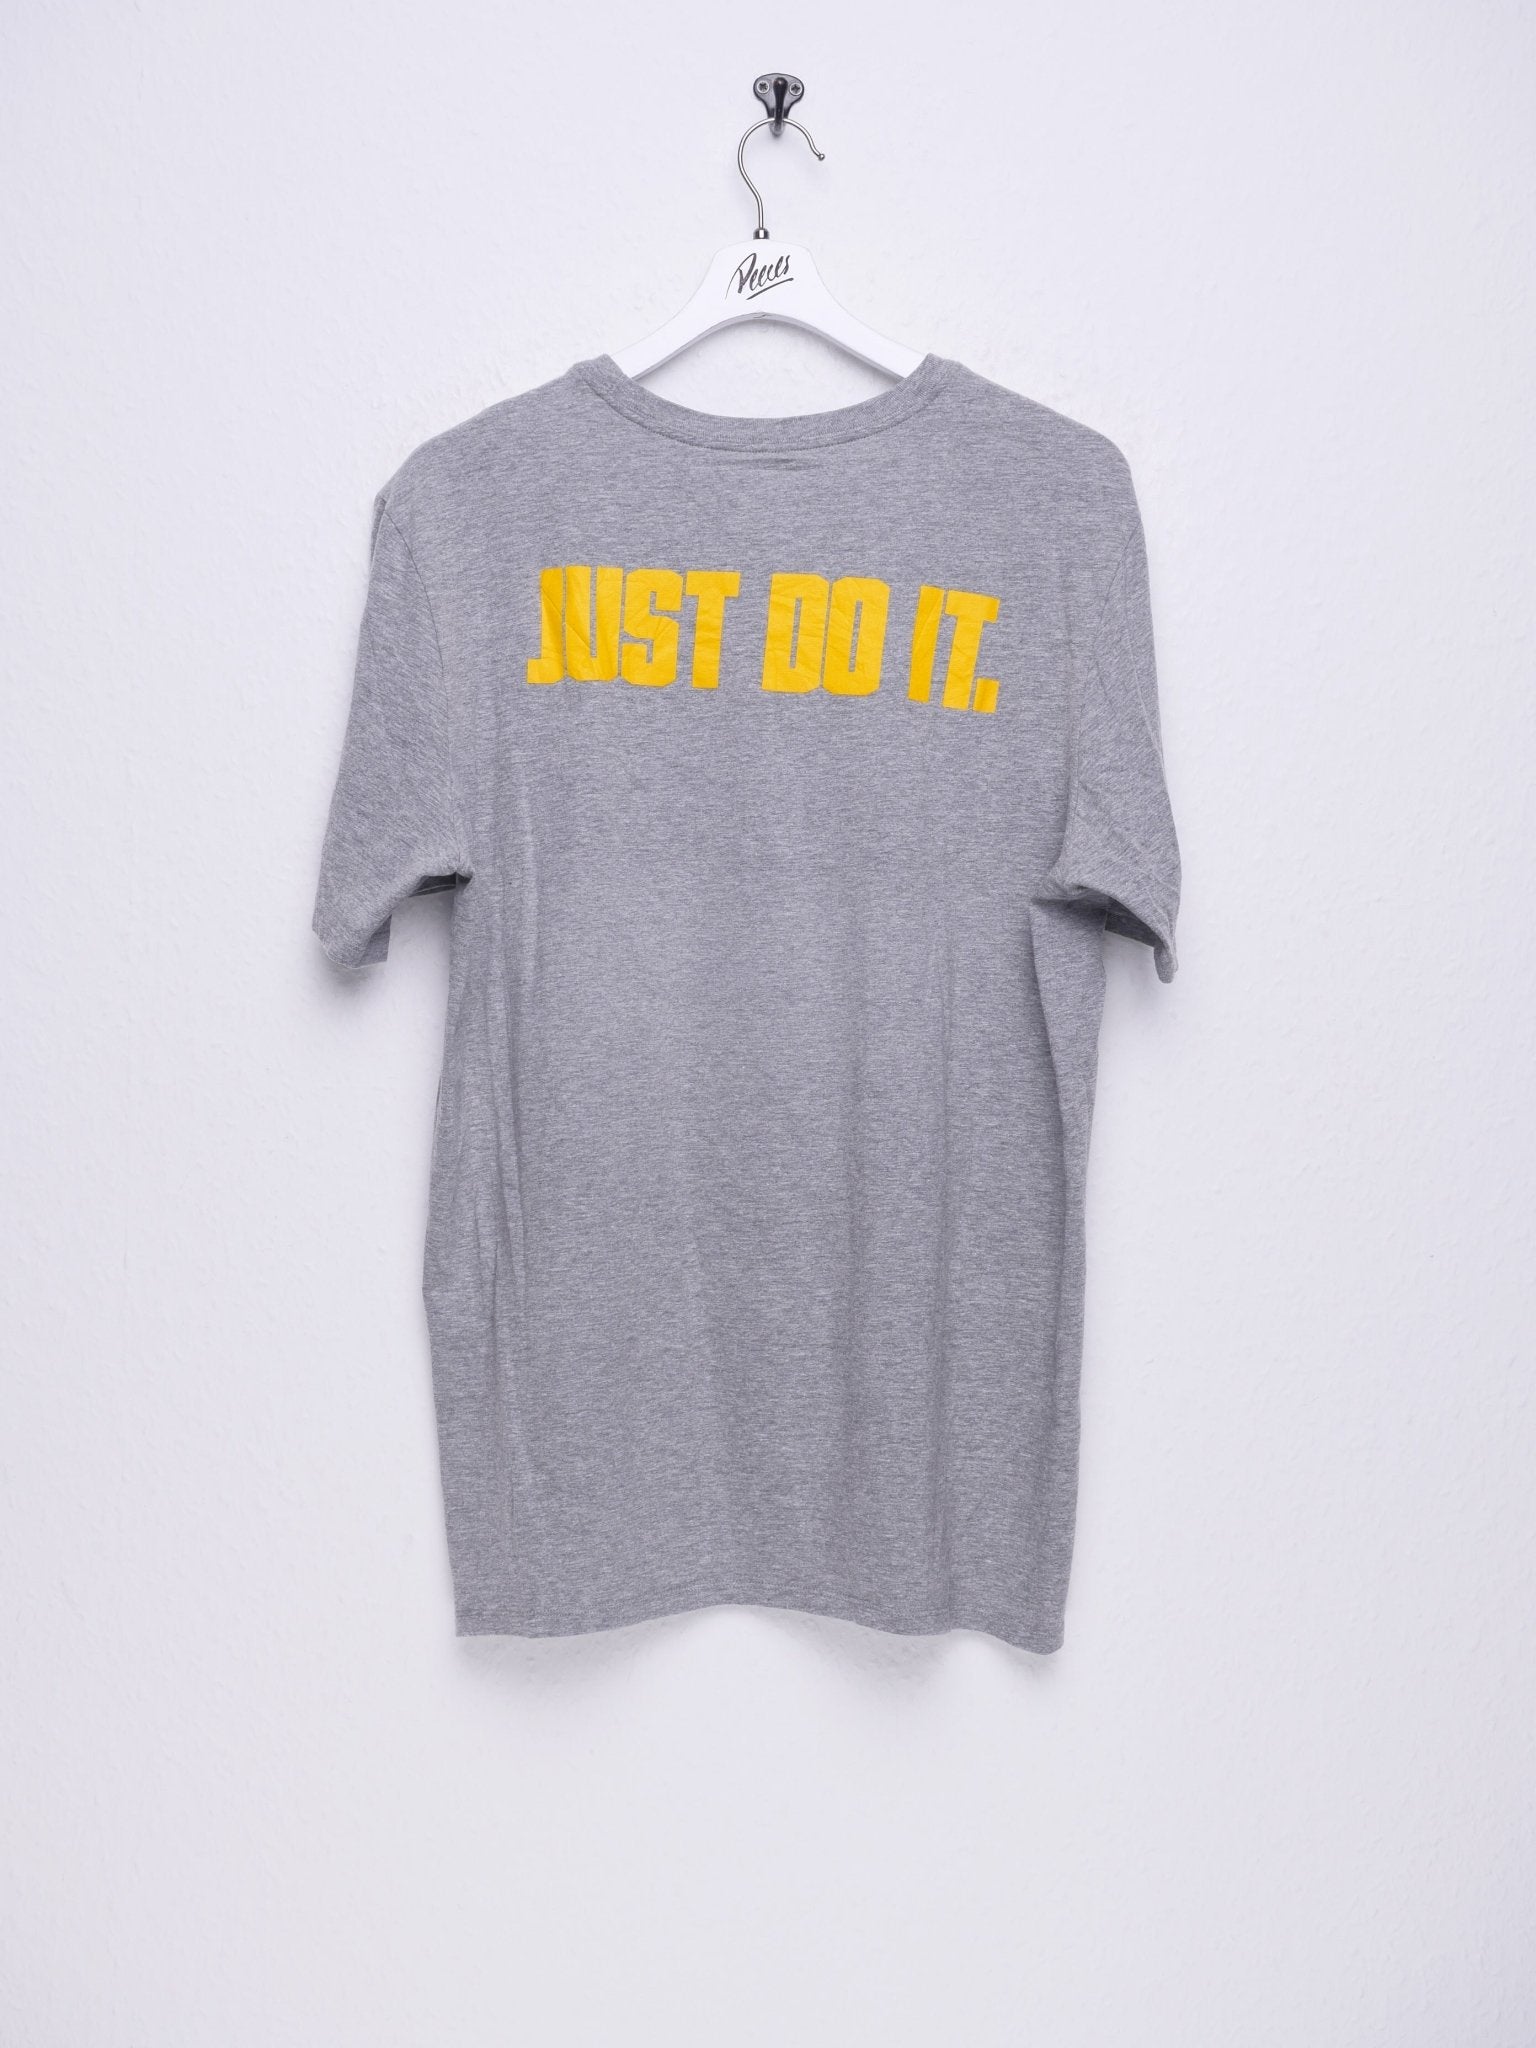 Nike Battle At The Border printed Swoosh grey Shirt - Peeces